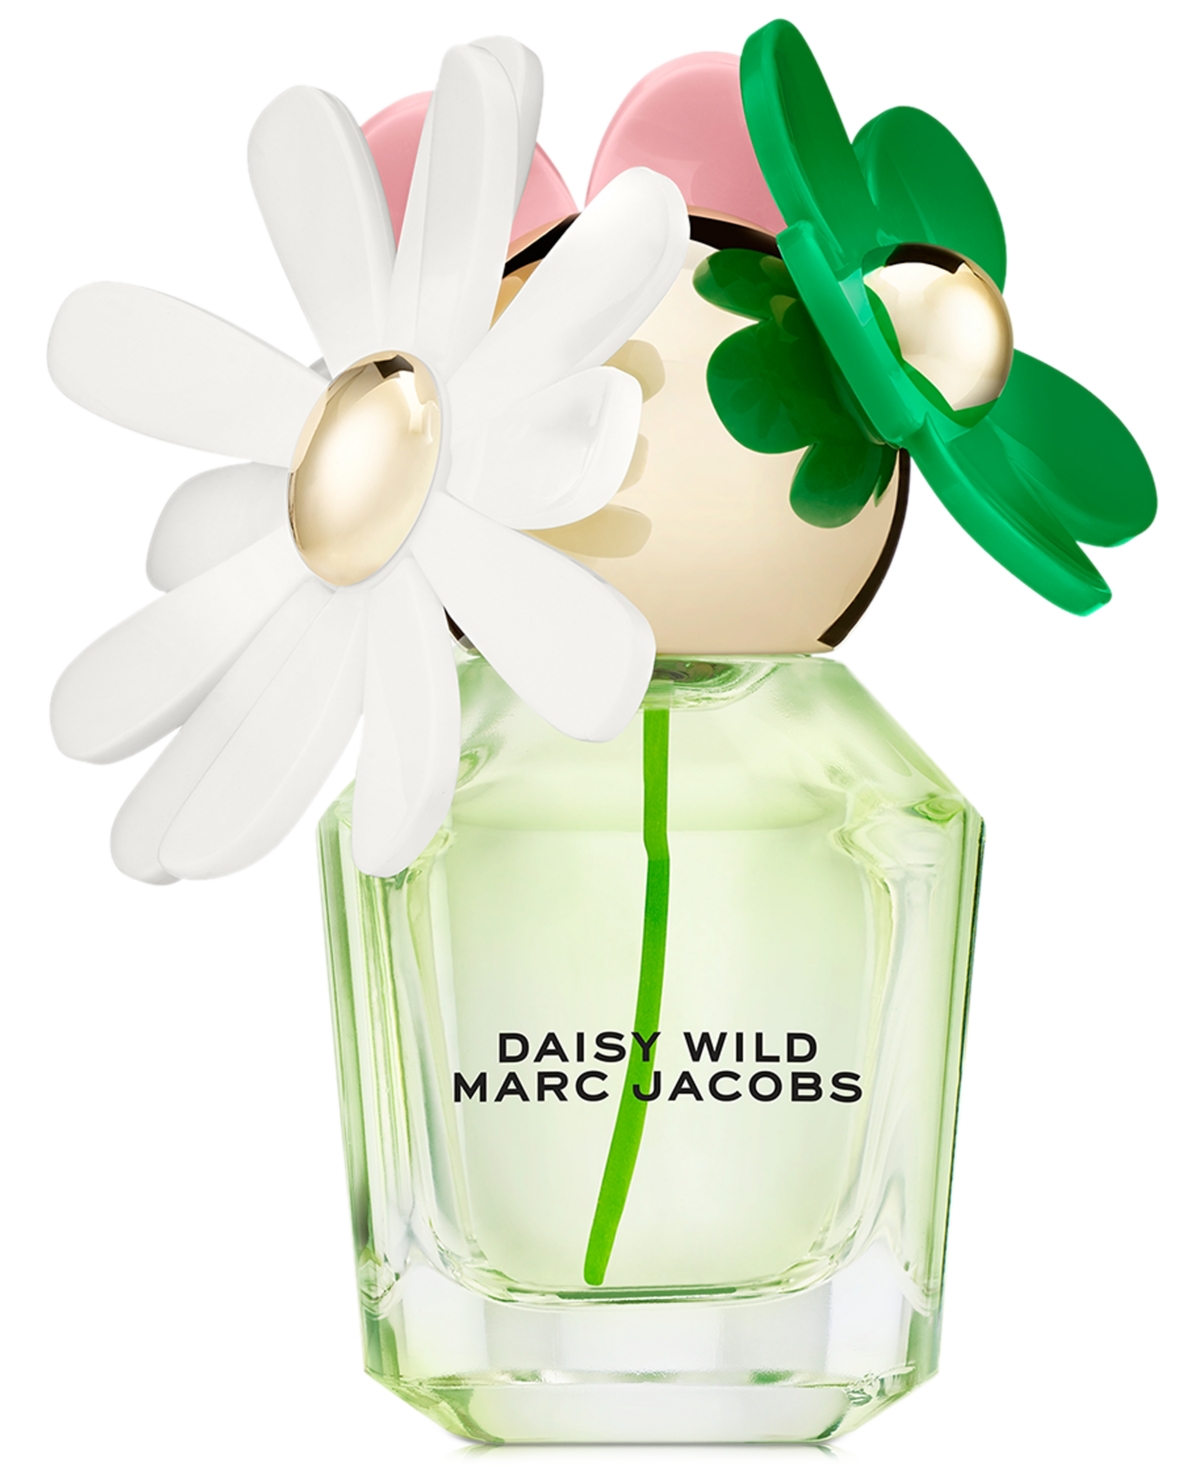 Daisy Wild Eau de Parfum, 1 oz.